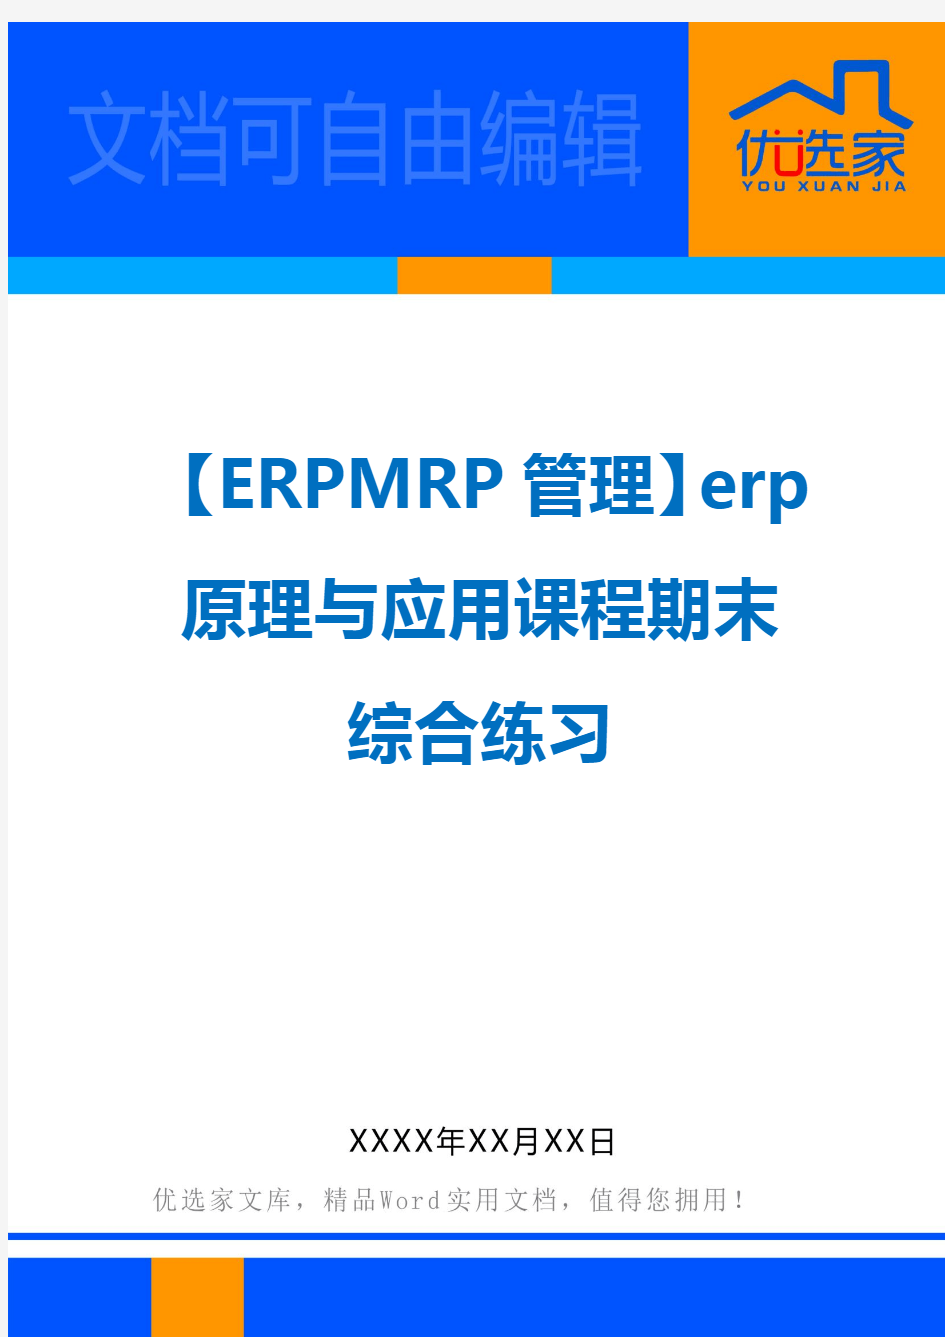 【ERPMRP管理】erp原理与应用课程期末综合练习